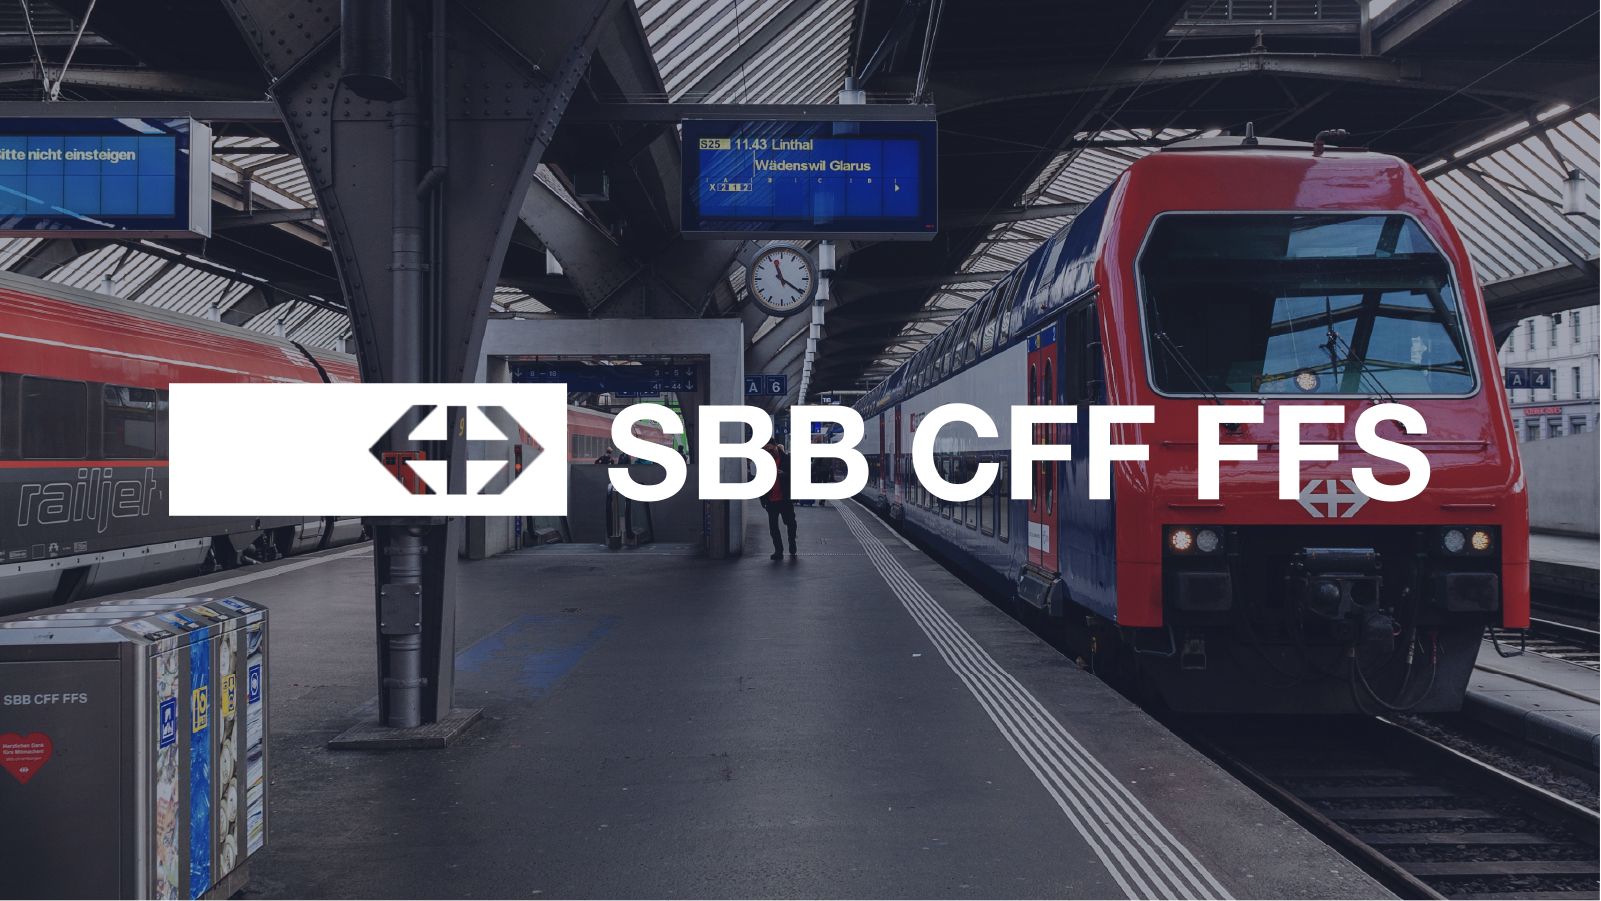 Graphic: Train station with overlay SBB CFF FFS logo